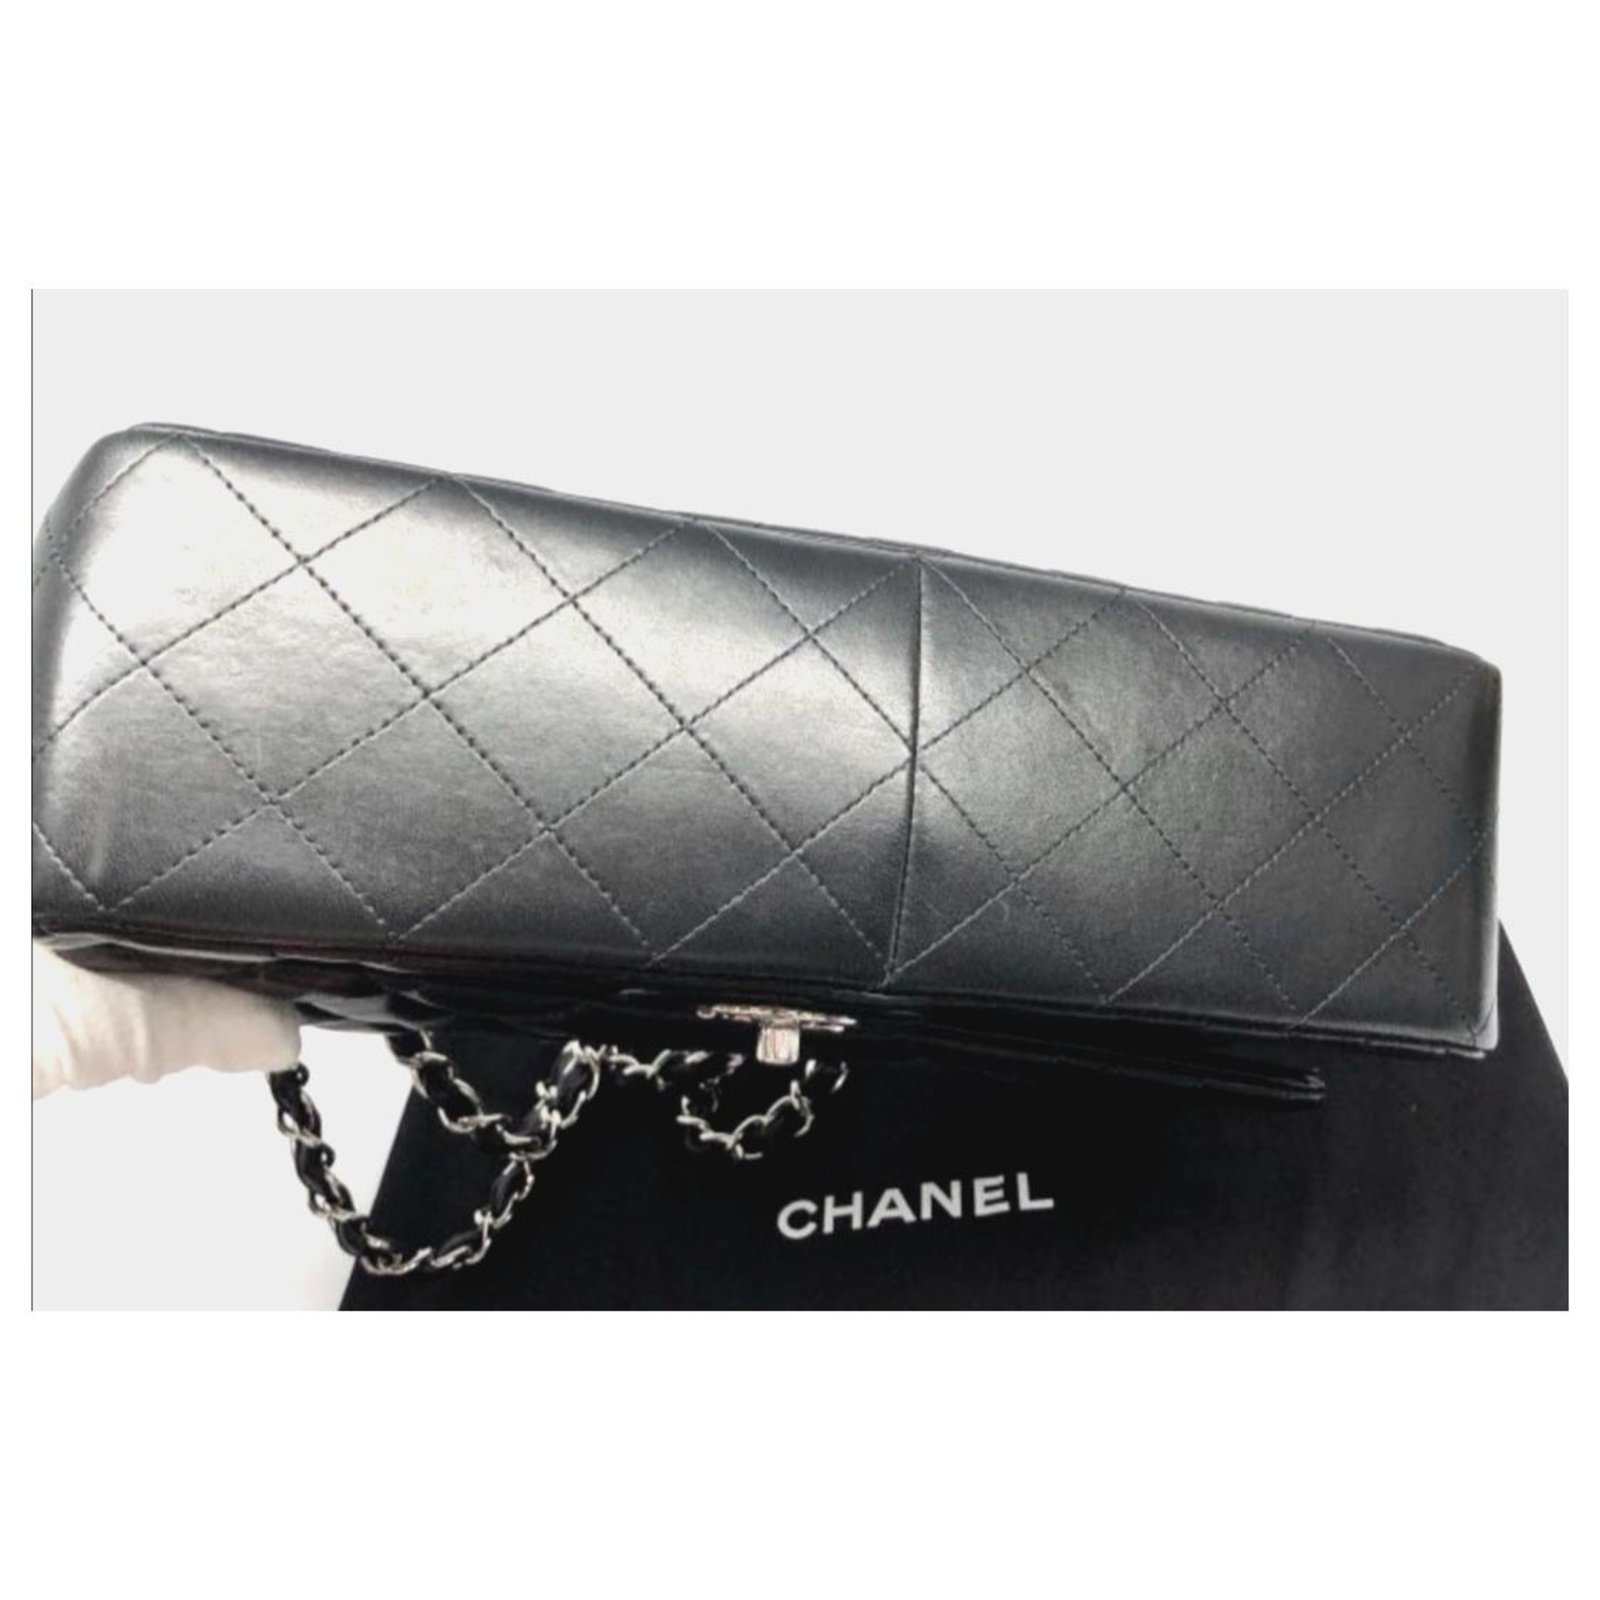 900+ Chanel ideas in 2023  chanel, chanel bag, chanel handbags